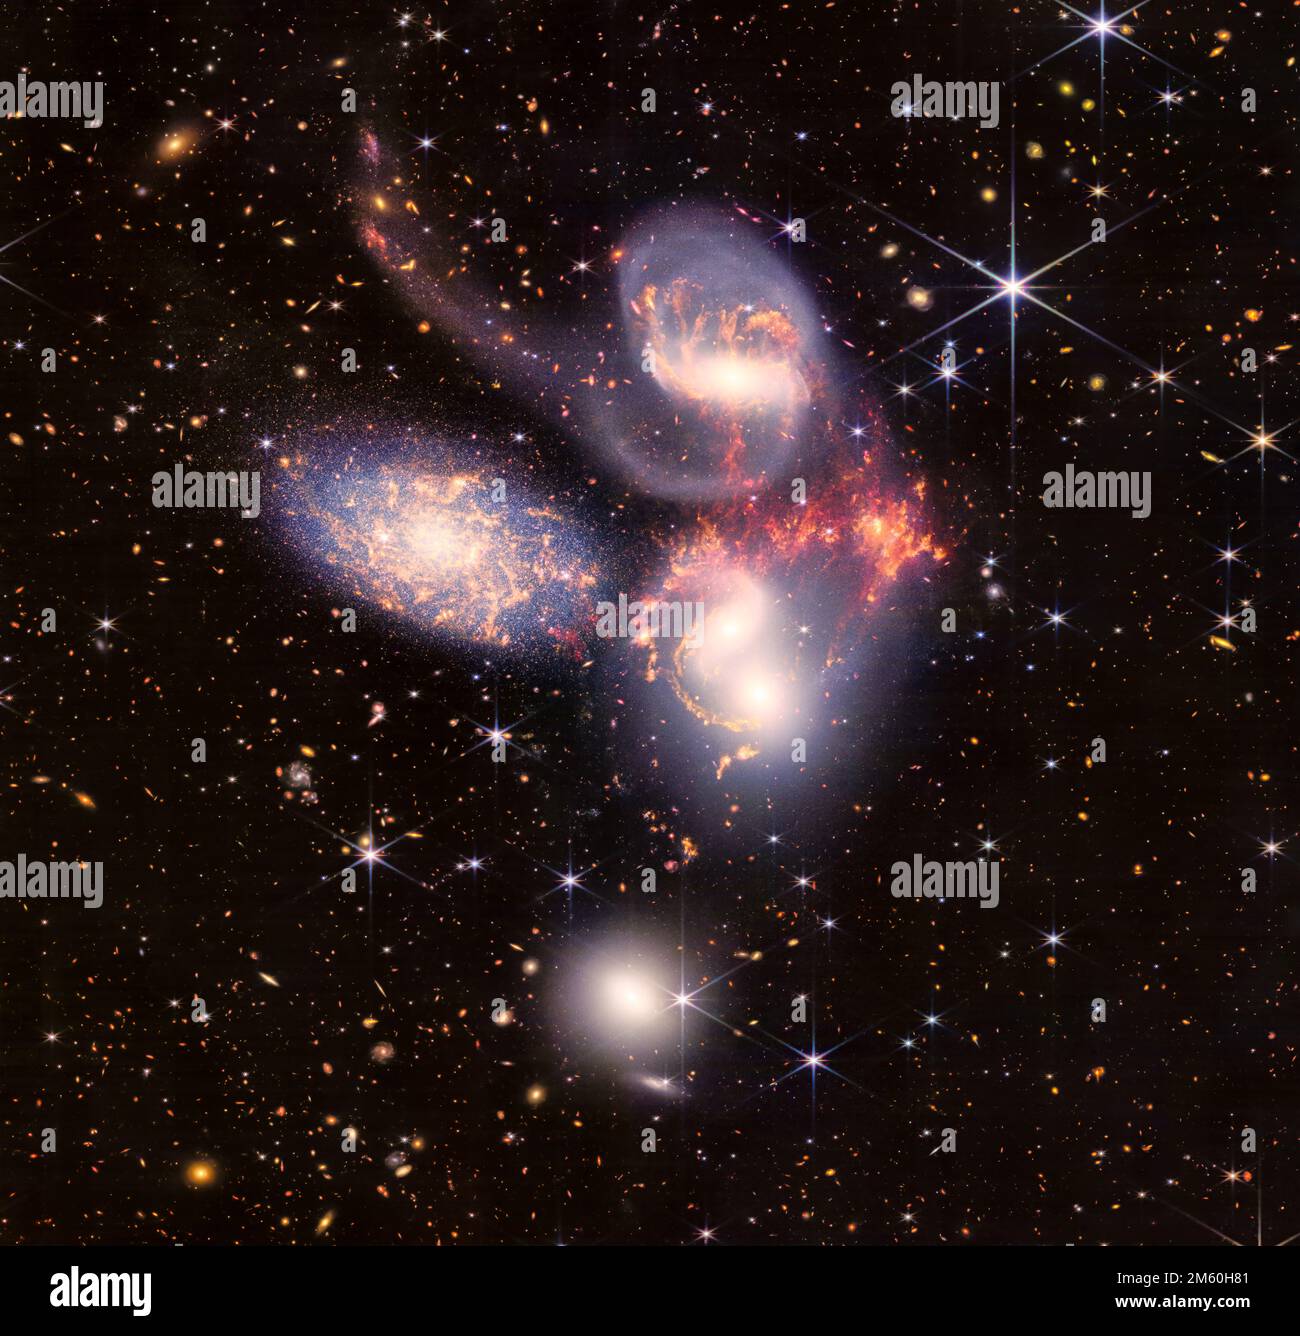 Stephans Quintet. For NASA usage guidelines: refer to https://www.nasa.gov/multimedia/guidelines/index.htm Stock Photo